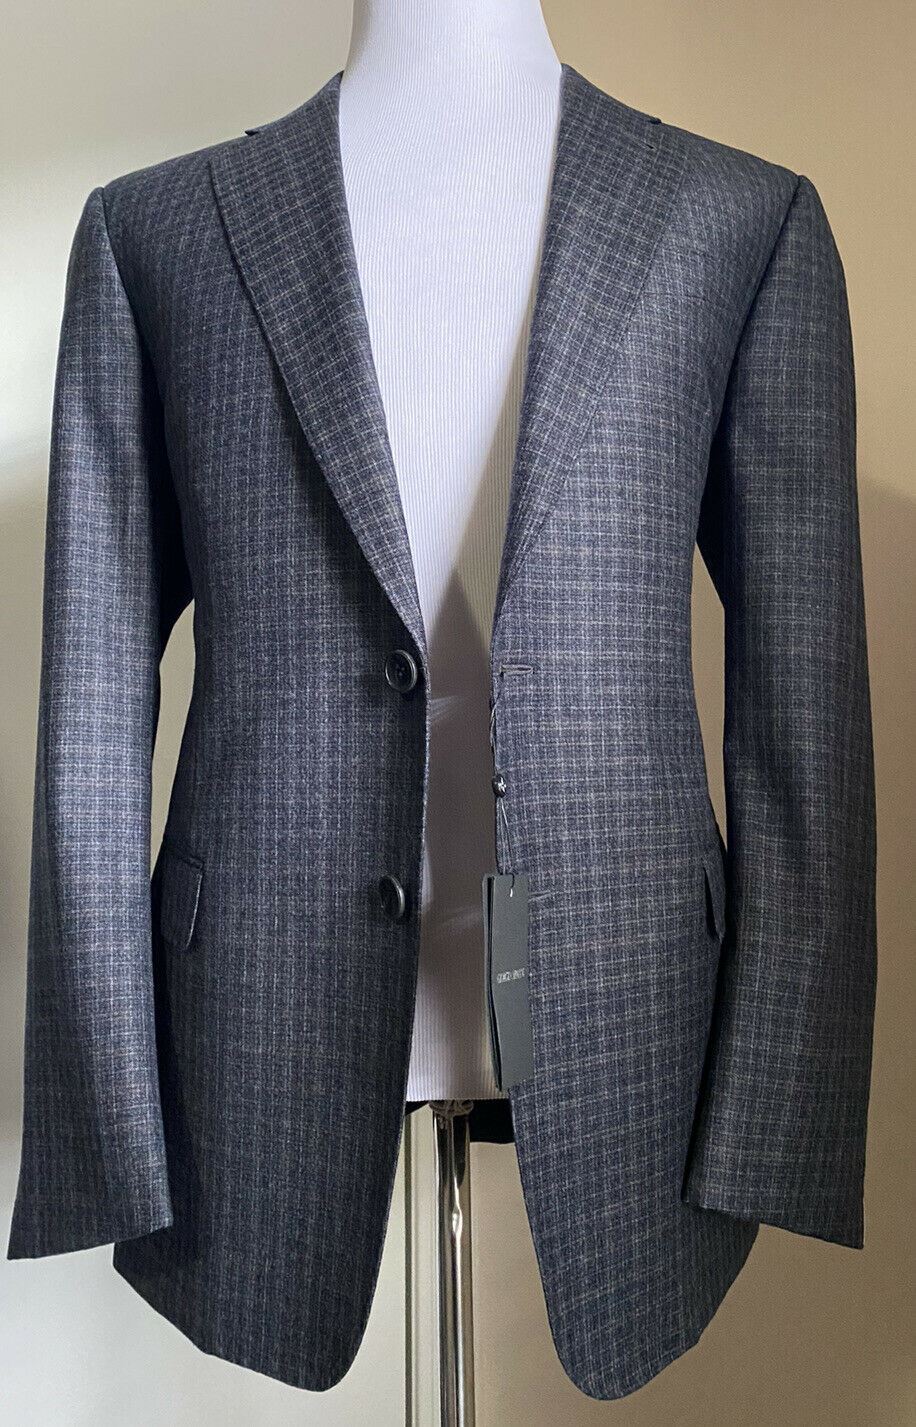 Neuer 4500 $ Giorgio Armani Herrenanzug aus weicher Wolle DK Grau CK 42R US (52R Eu) Italien